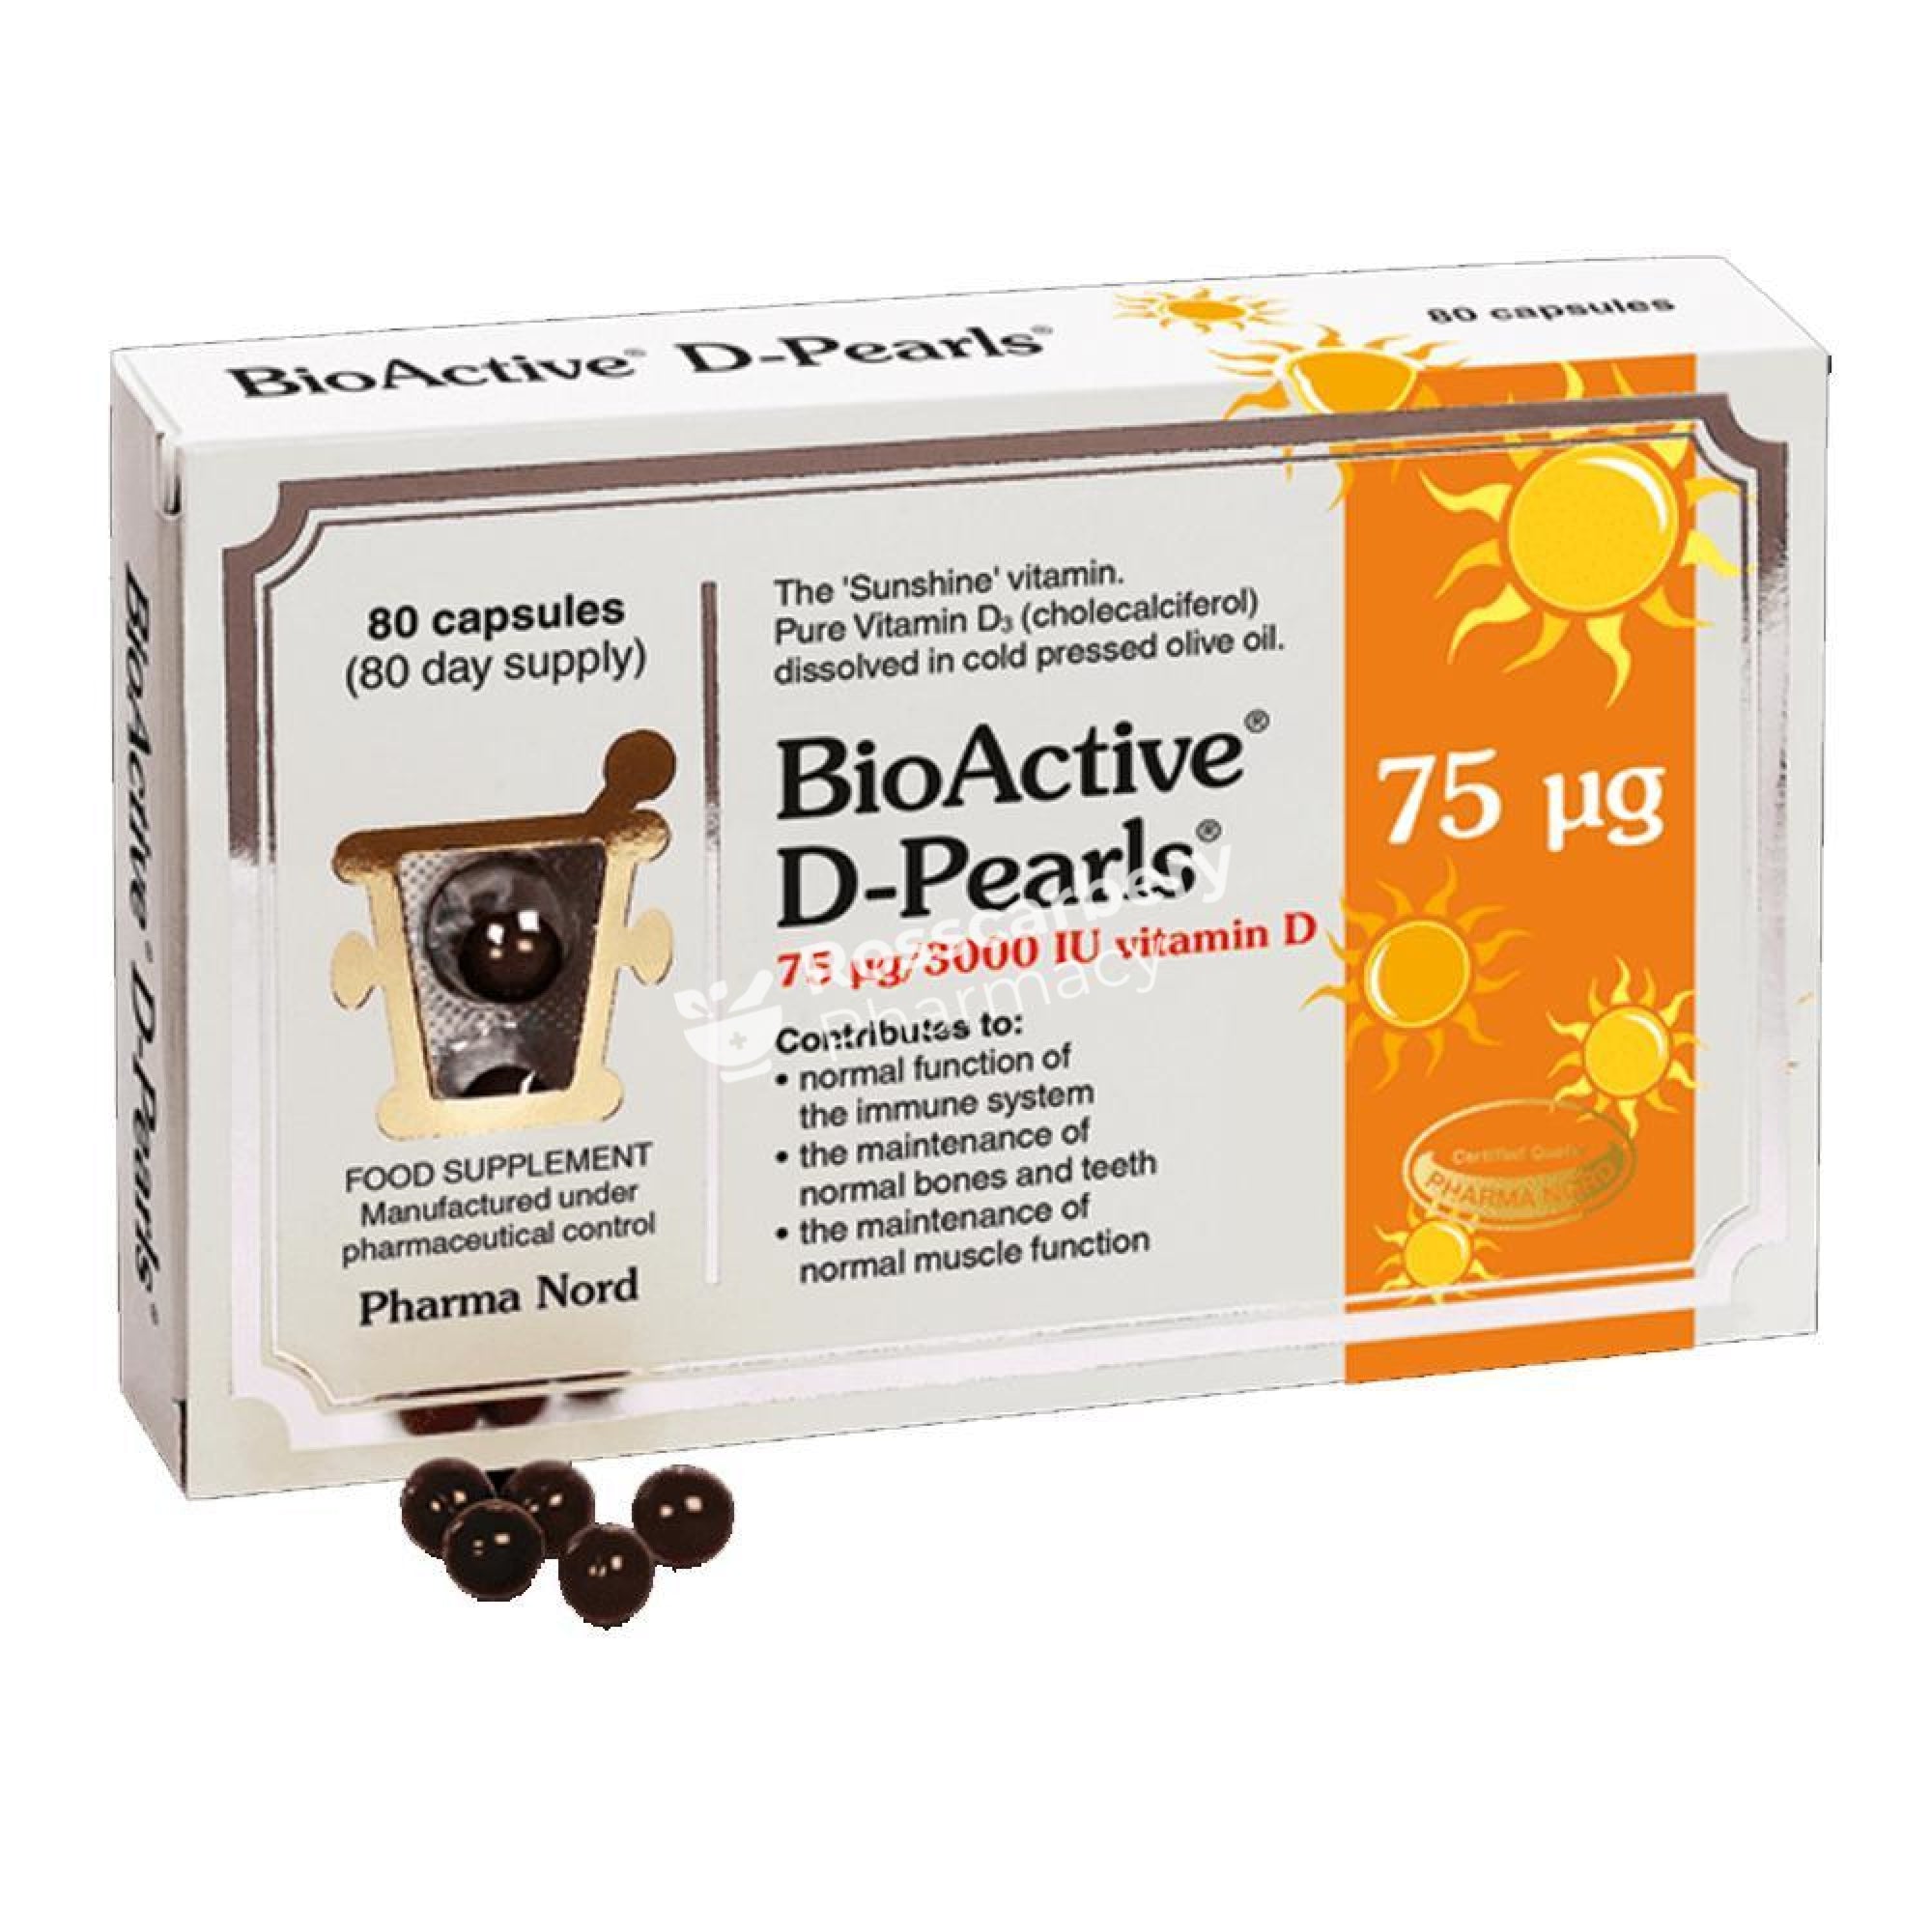 Bioactive D-Pearls 75Ug/3000 Iu Vitamin D Immune System